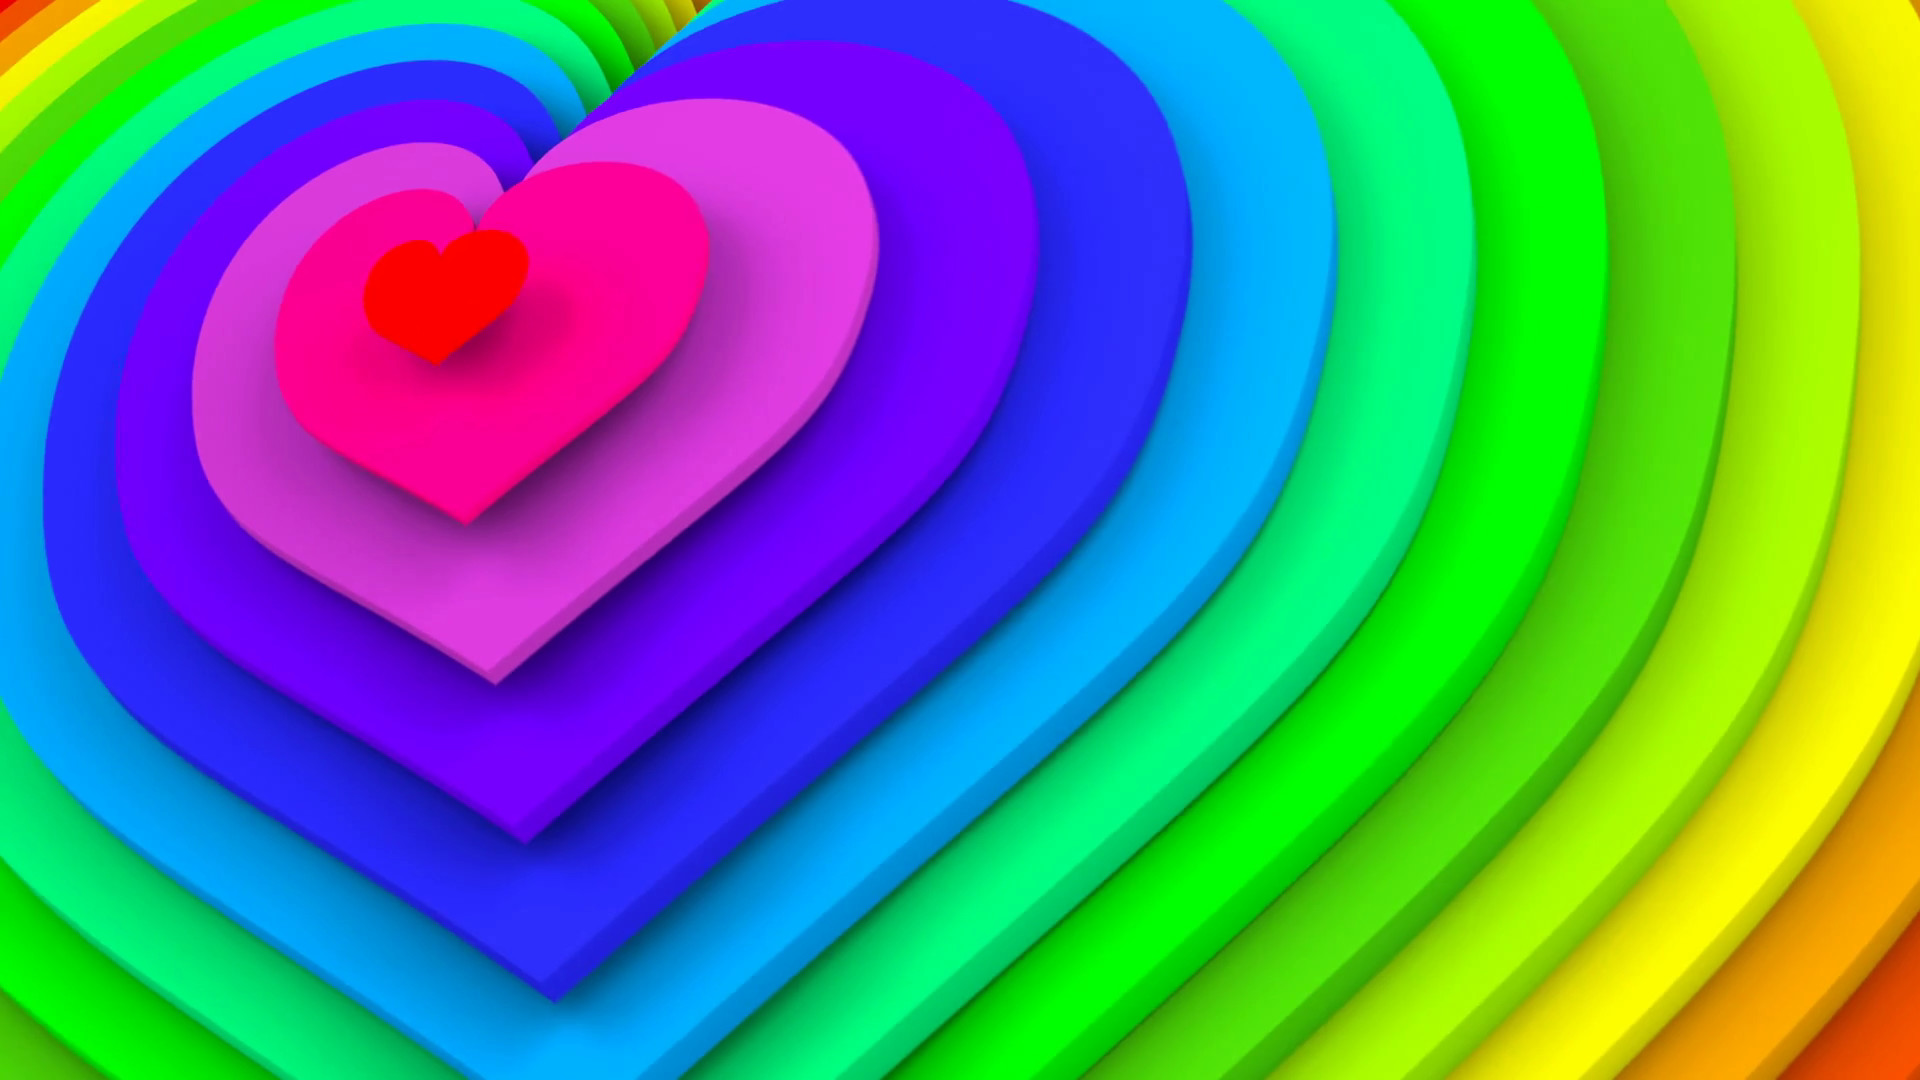 1920x1080 Rainbow spectrum heart shapes seamless loop 3D animation 4k UHD (3840x2160)